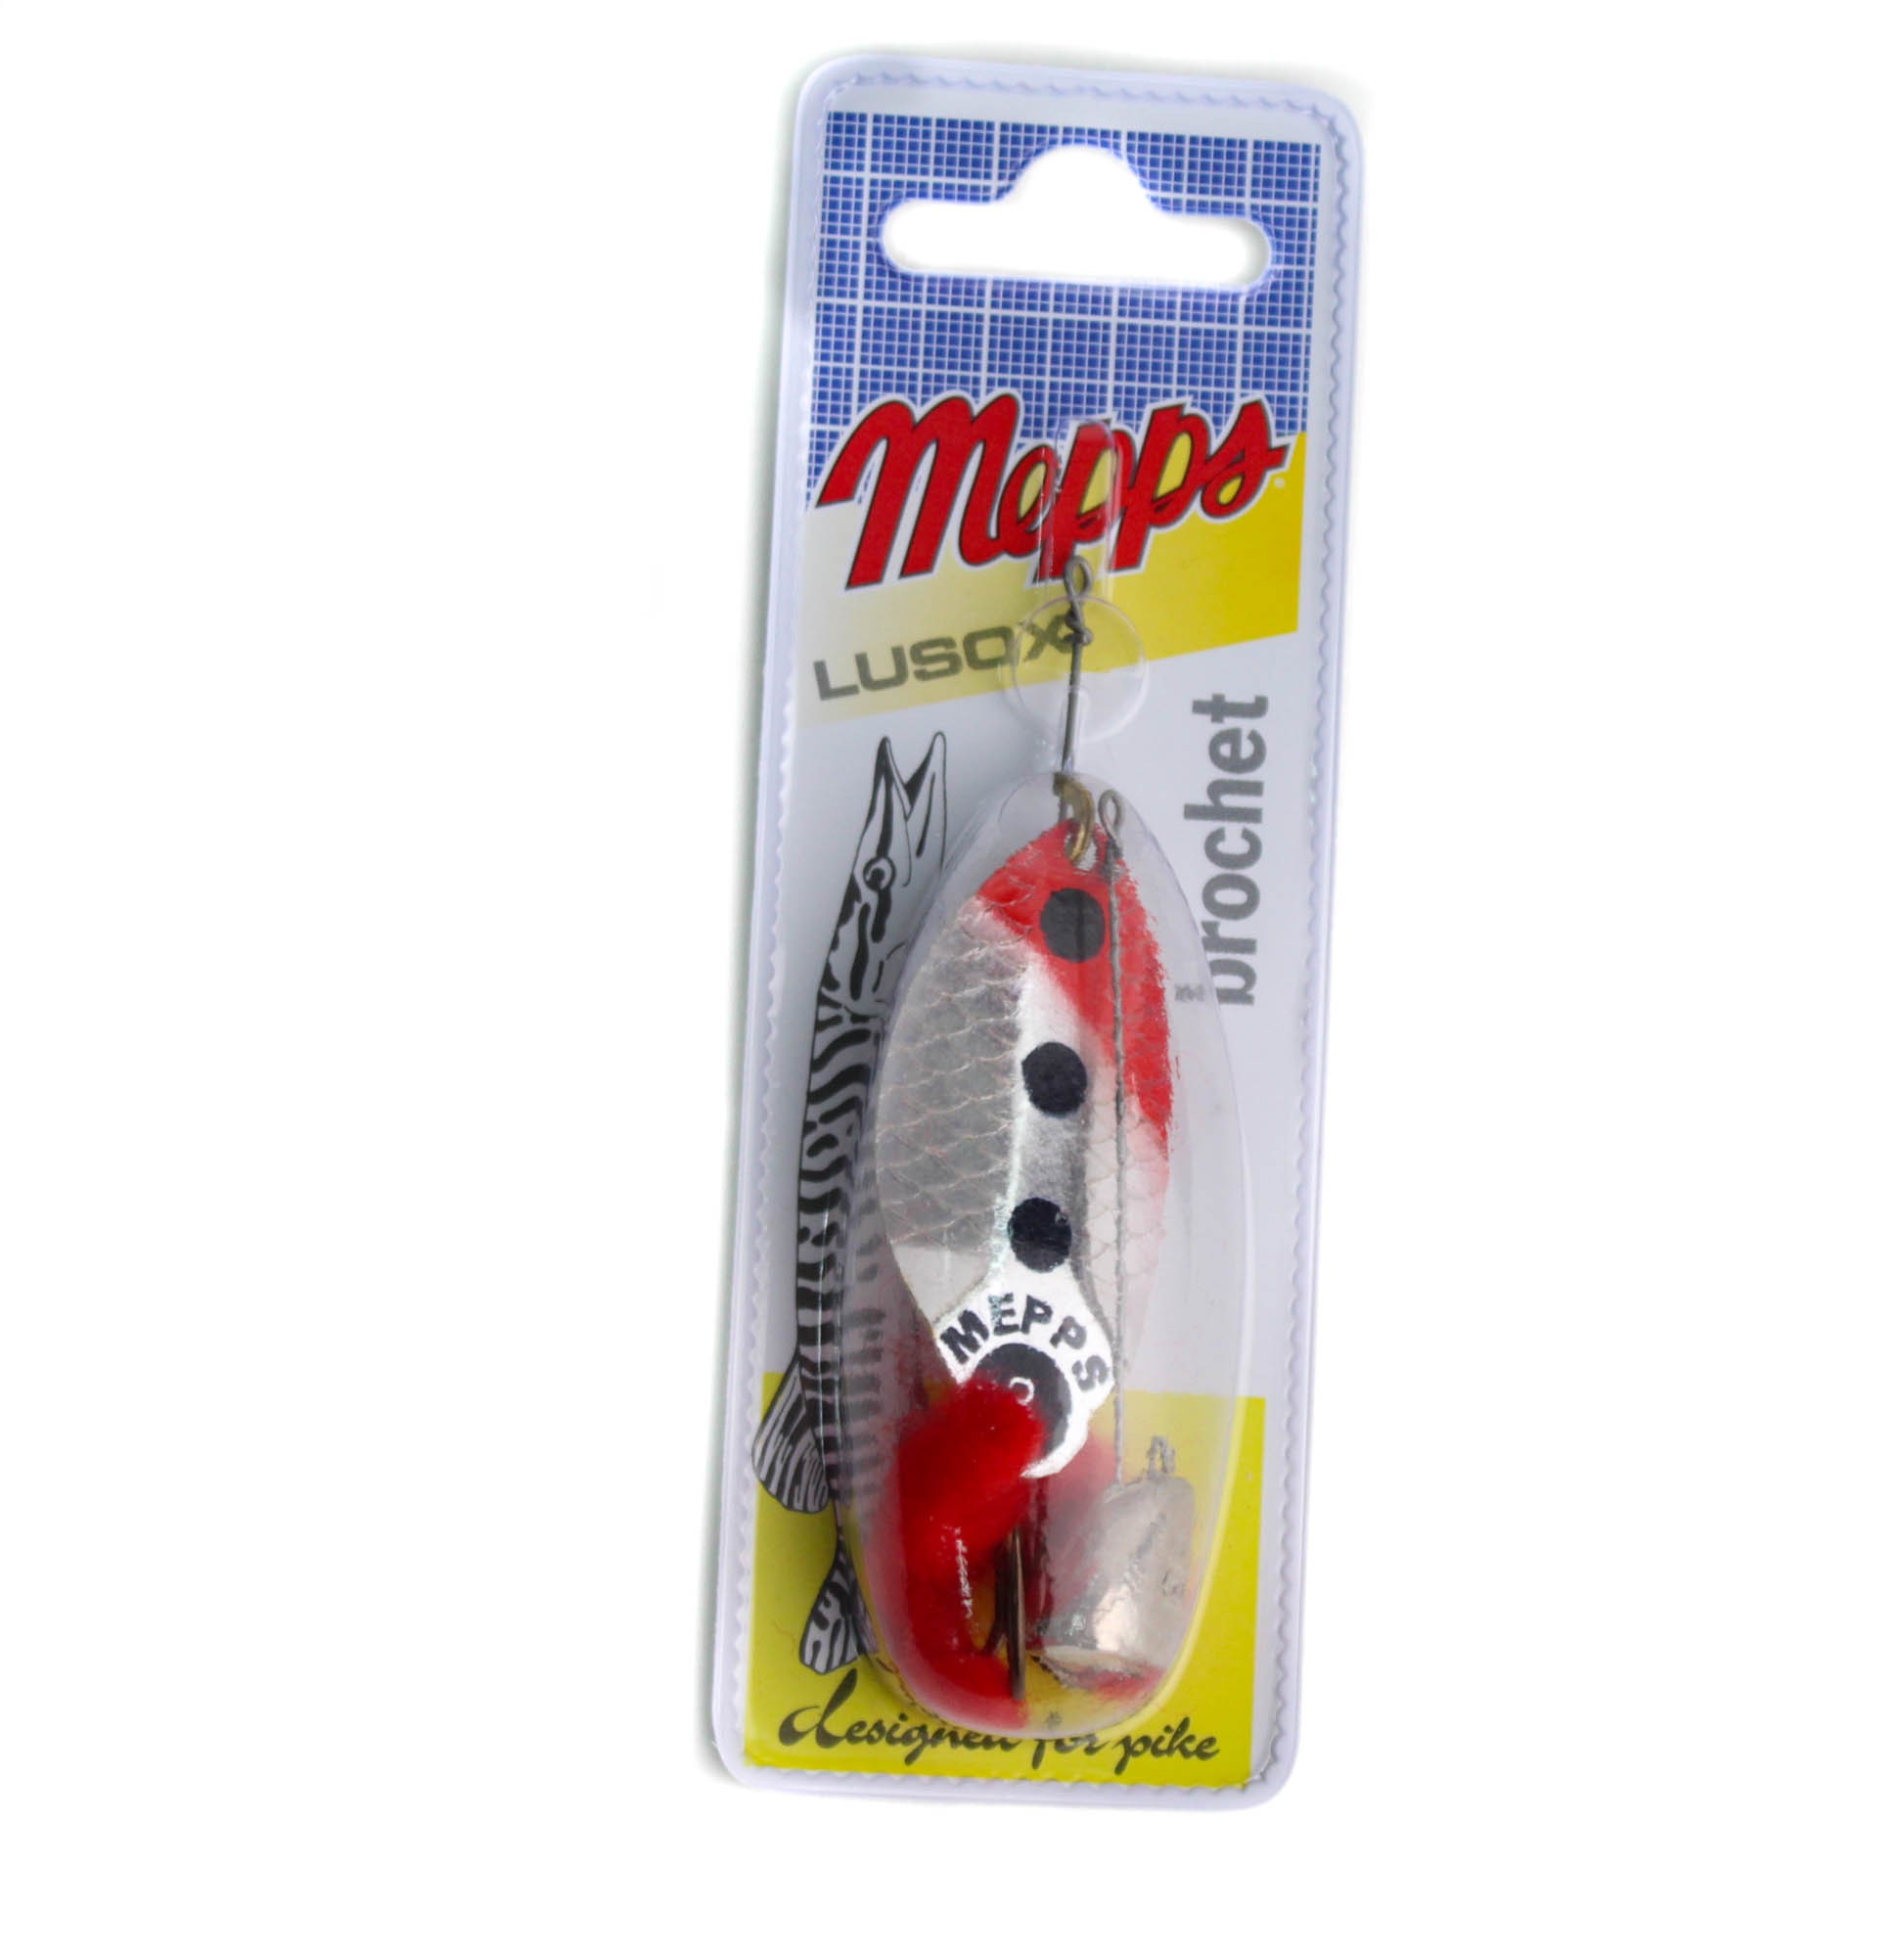 Блесна Mepps Lusox Fluo №3 silver Red блистер - фото 1